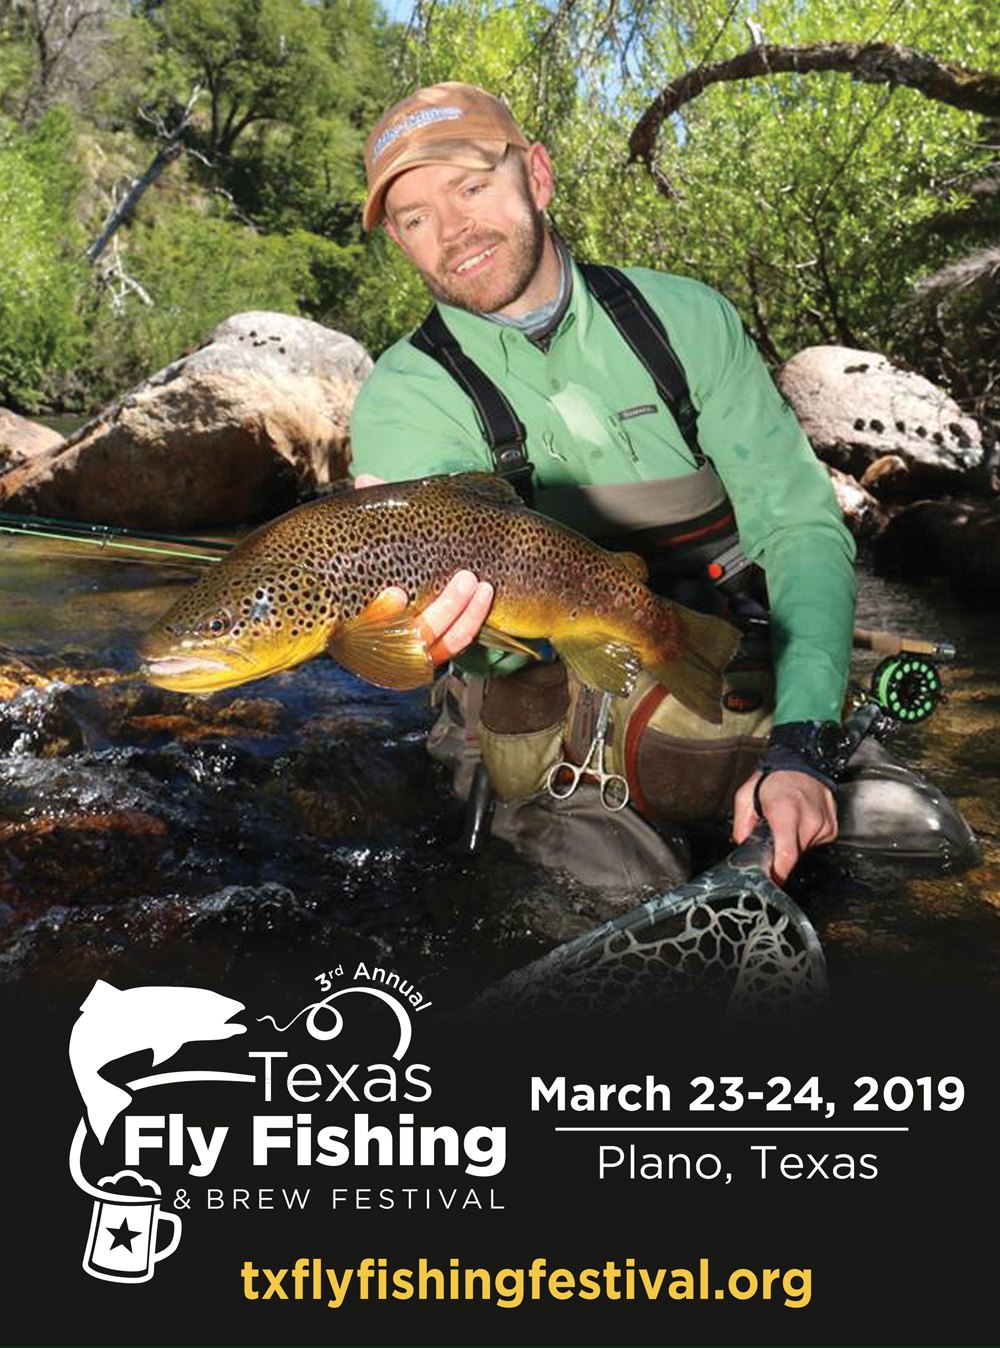 Texas Fly Fishing & Brew Festival 2019 at Plano